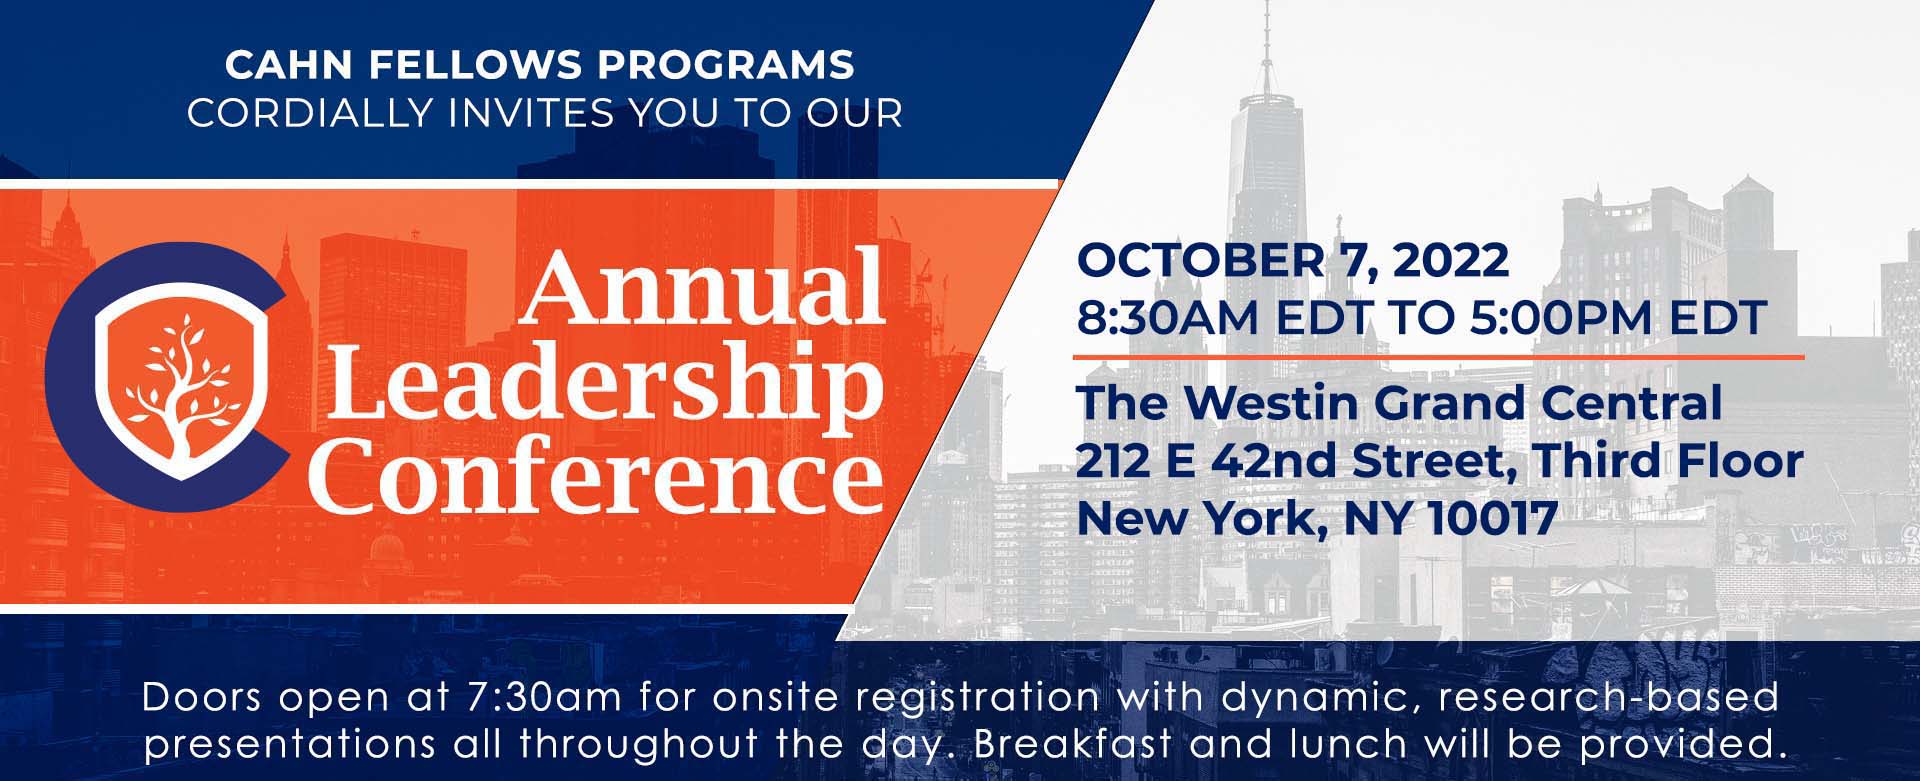 leadership conference invitation